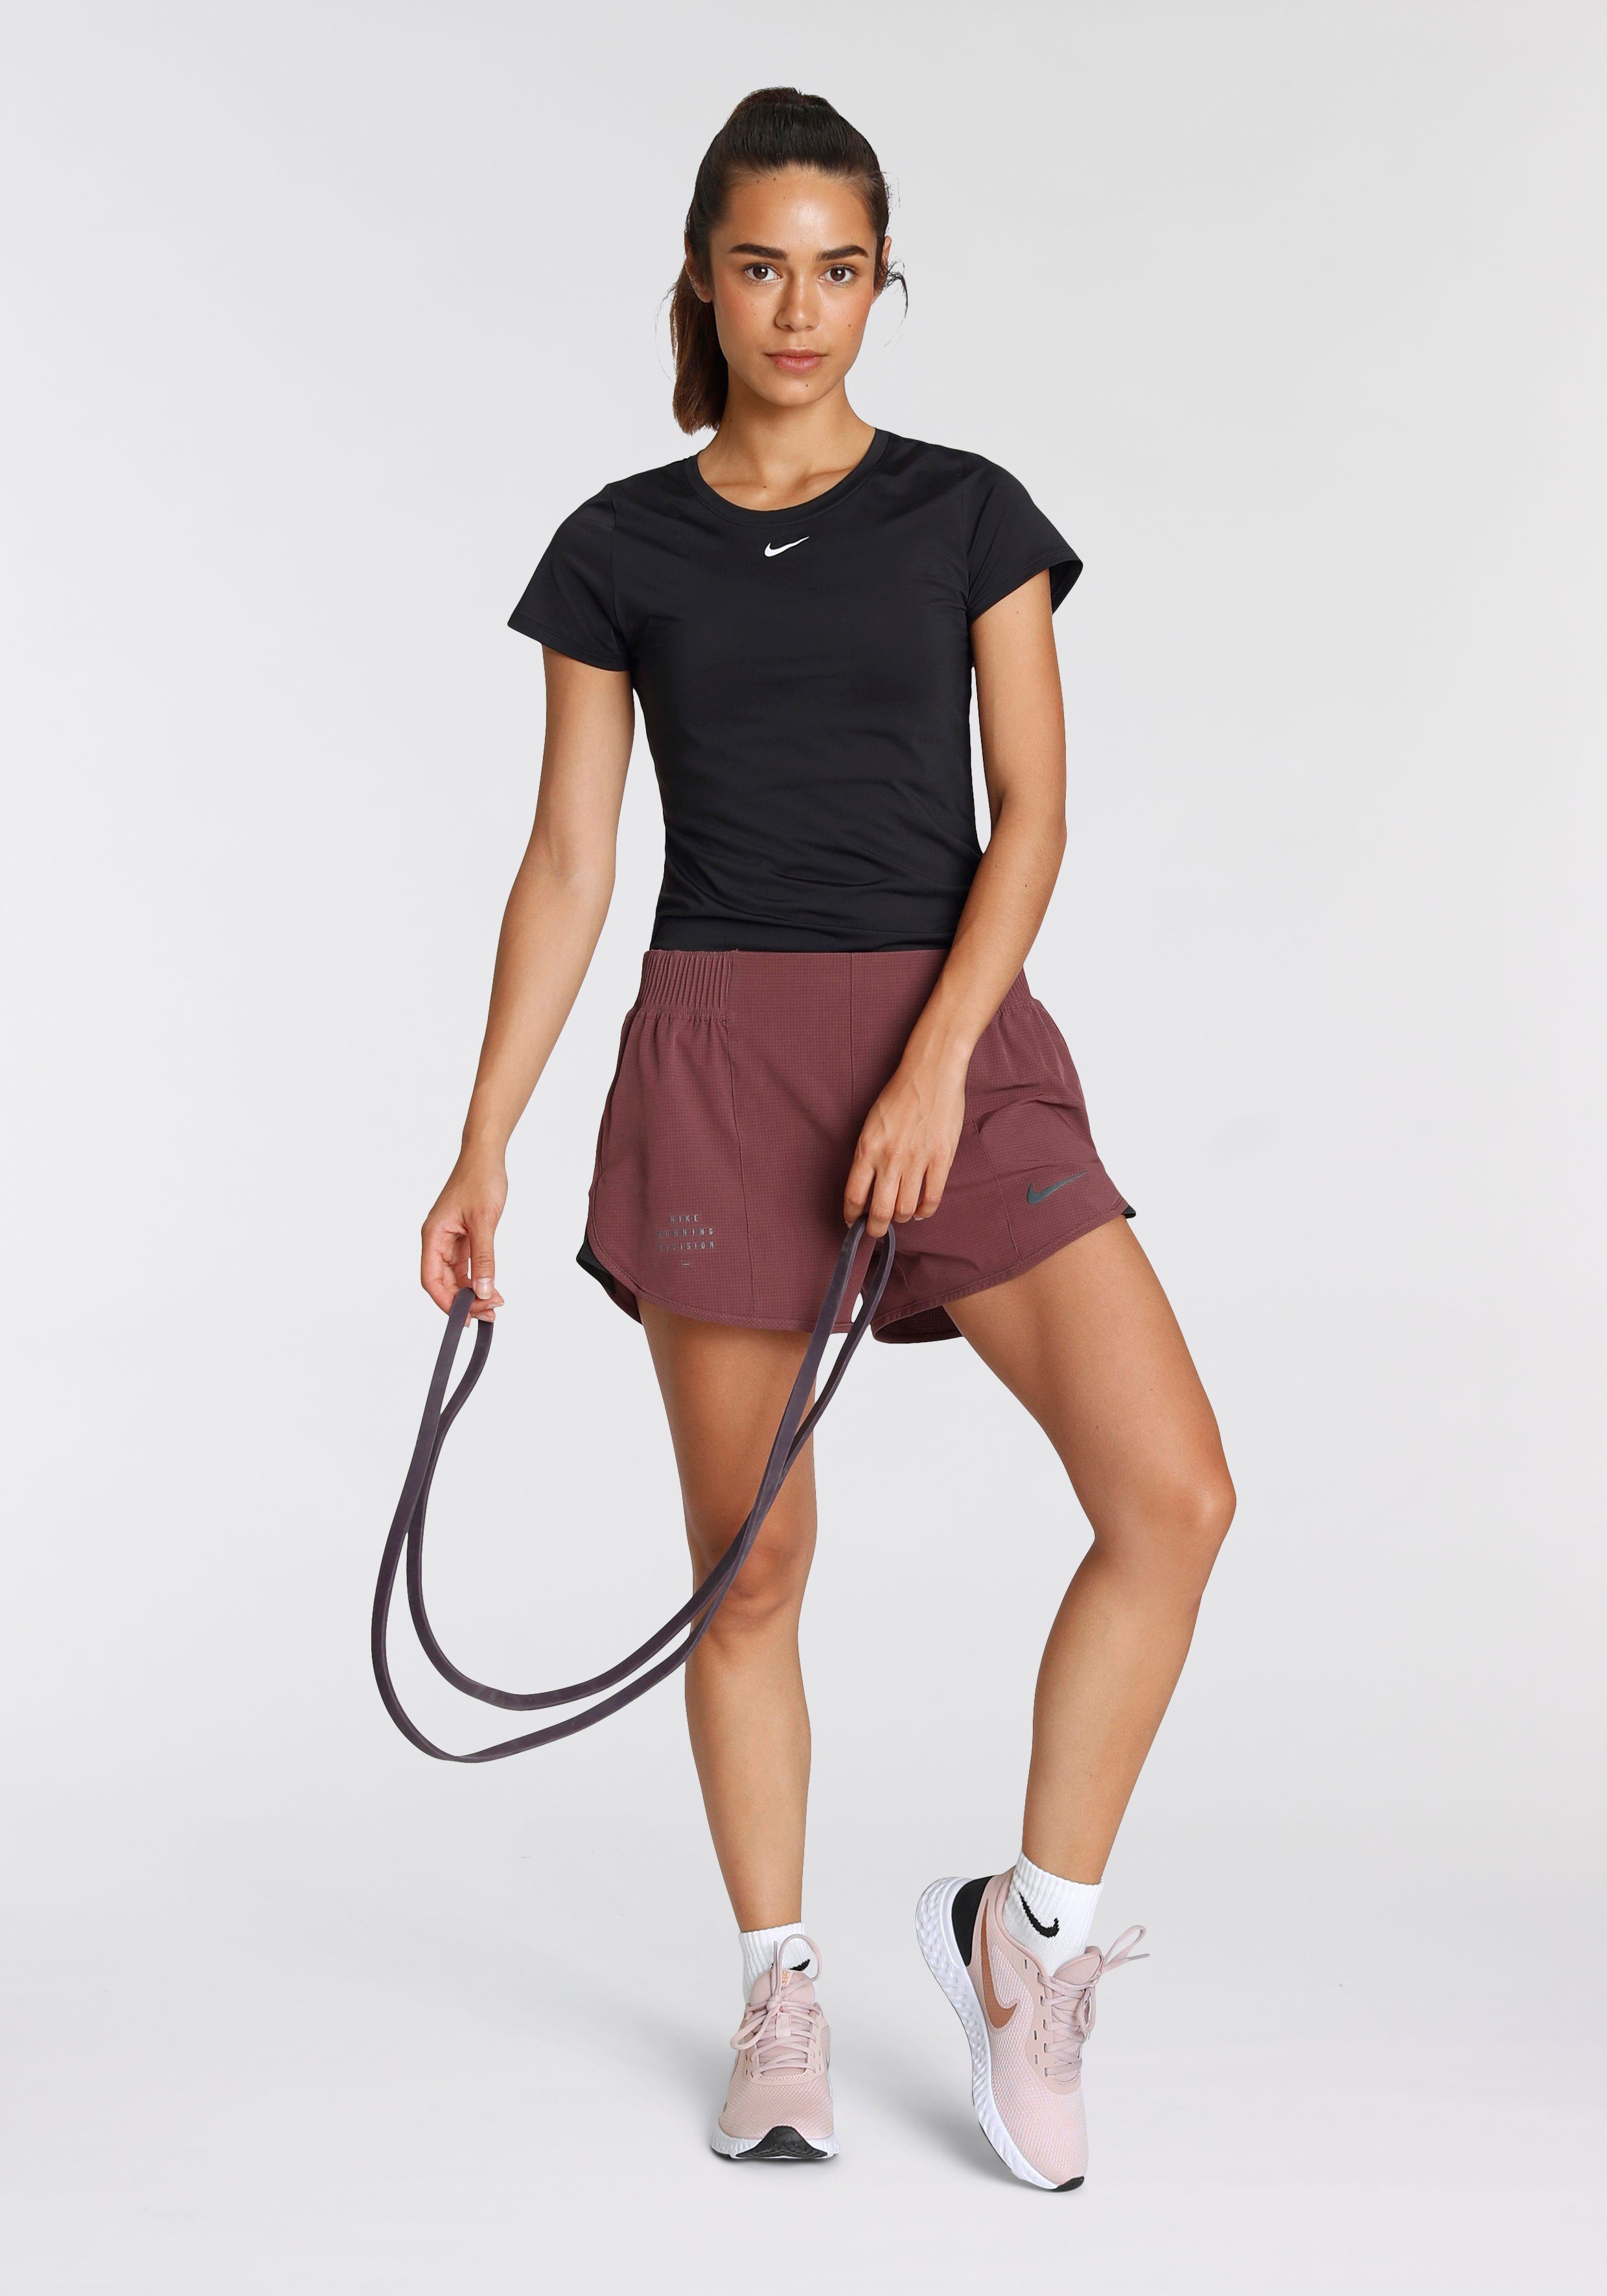 WOMEN'S Nike FIT ONE SLIM Trainingsshirt schwarz TOP DRI-FIT SHORT-SLEEVE